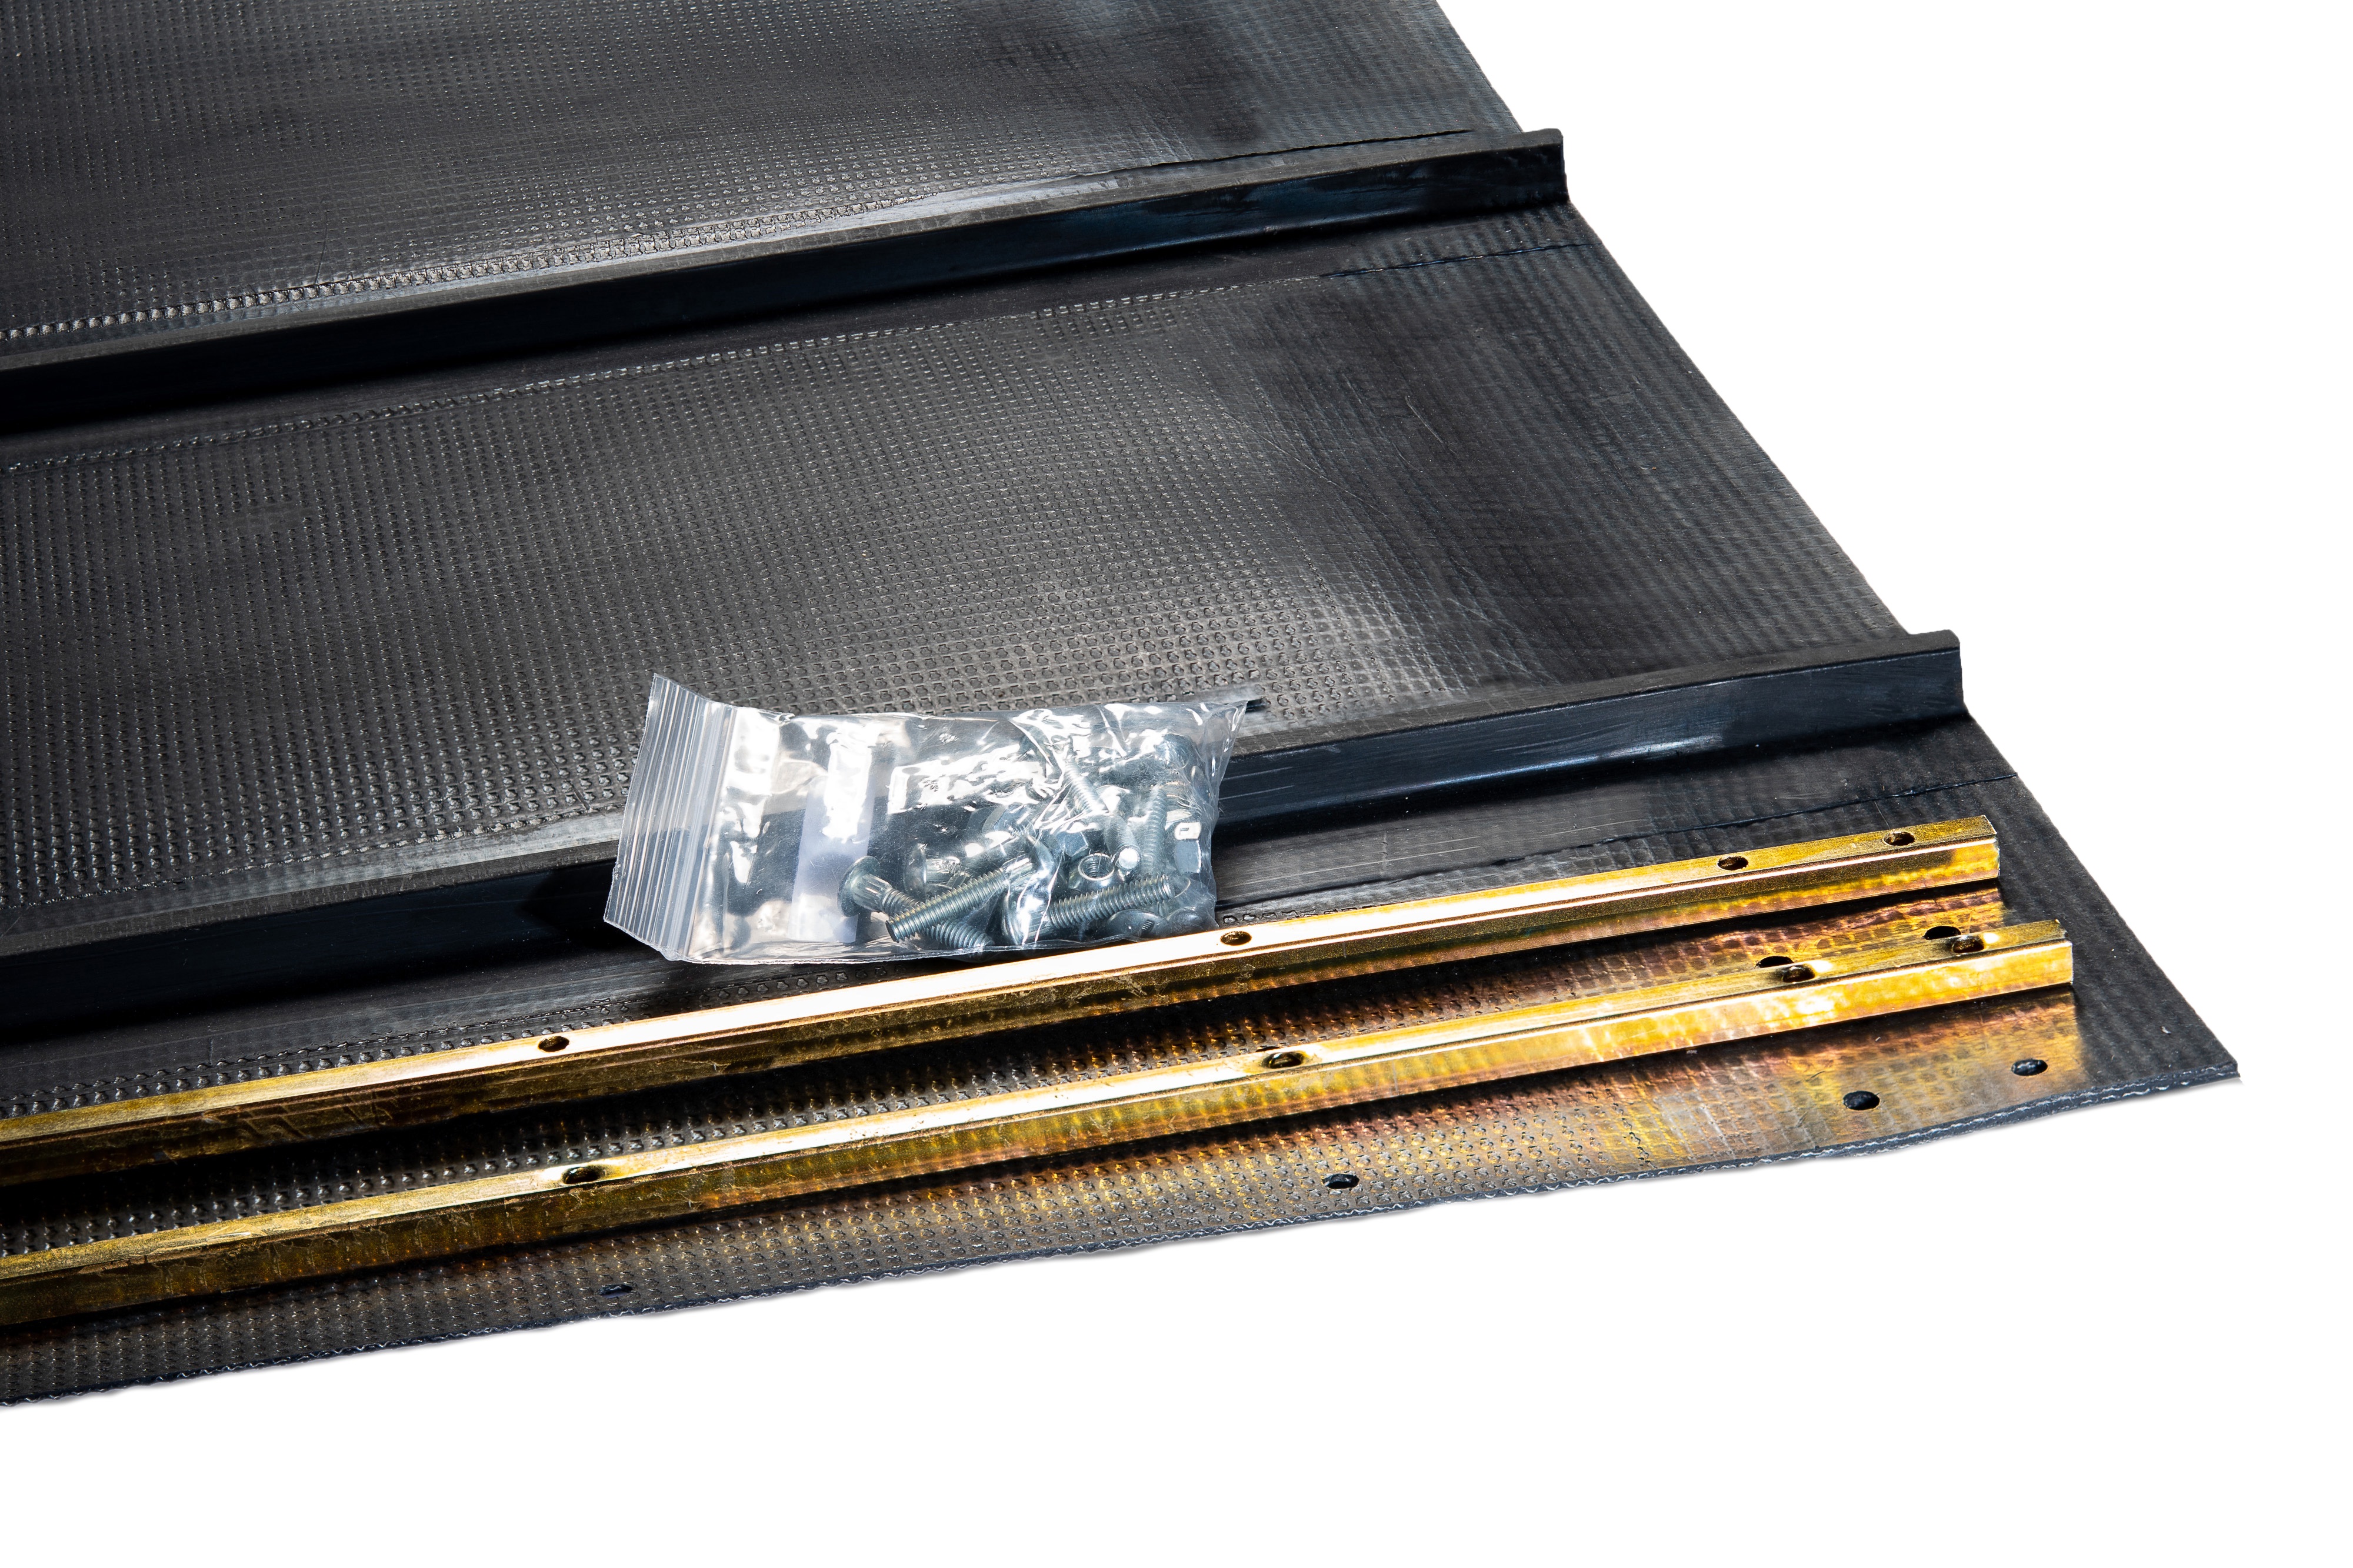 Product Spotlight on Repair Kits for Draper Header Belts and Baler Belts, Blog Post